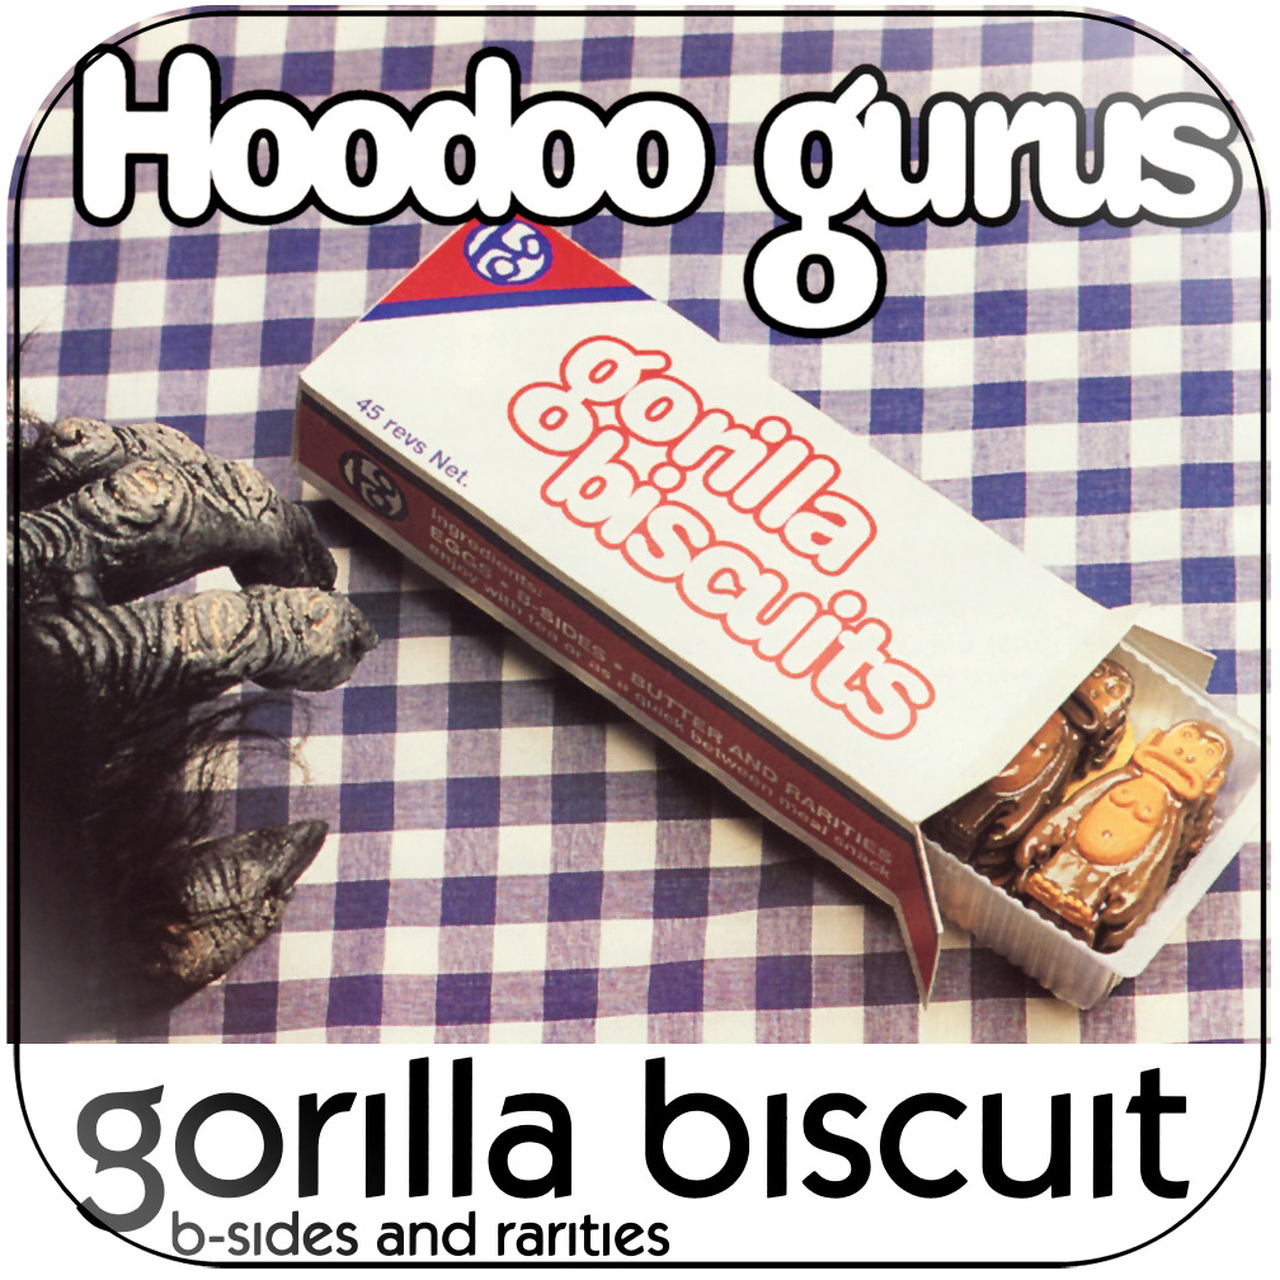 gorilla-biscuit-b-sides-rarities-album-cover-sticker__91770.1539896921